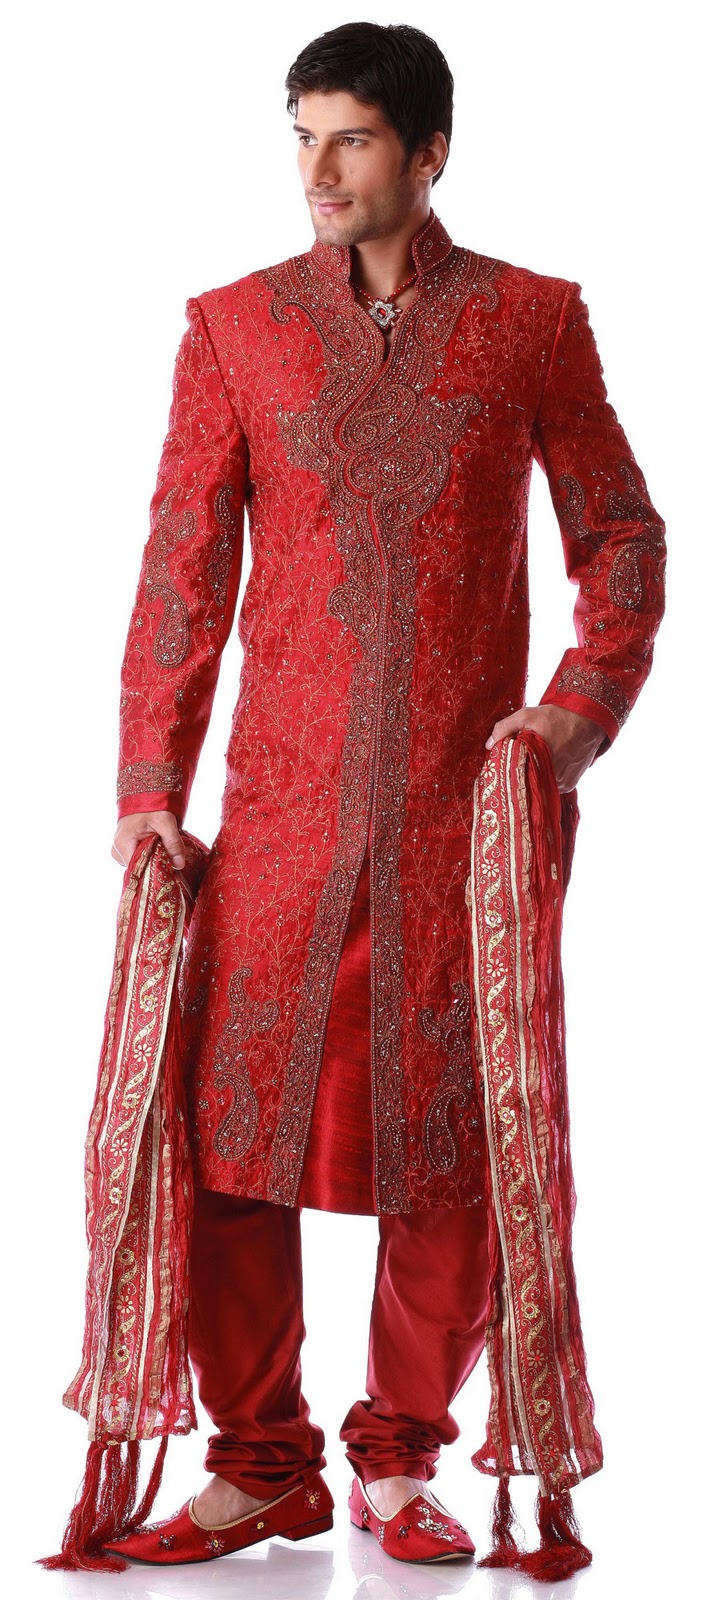  Men  Fashion Dresses  Red Dragon Neck Sherwani Men s  